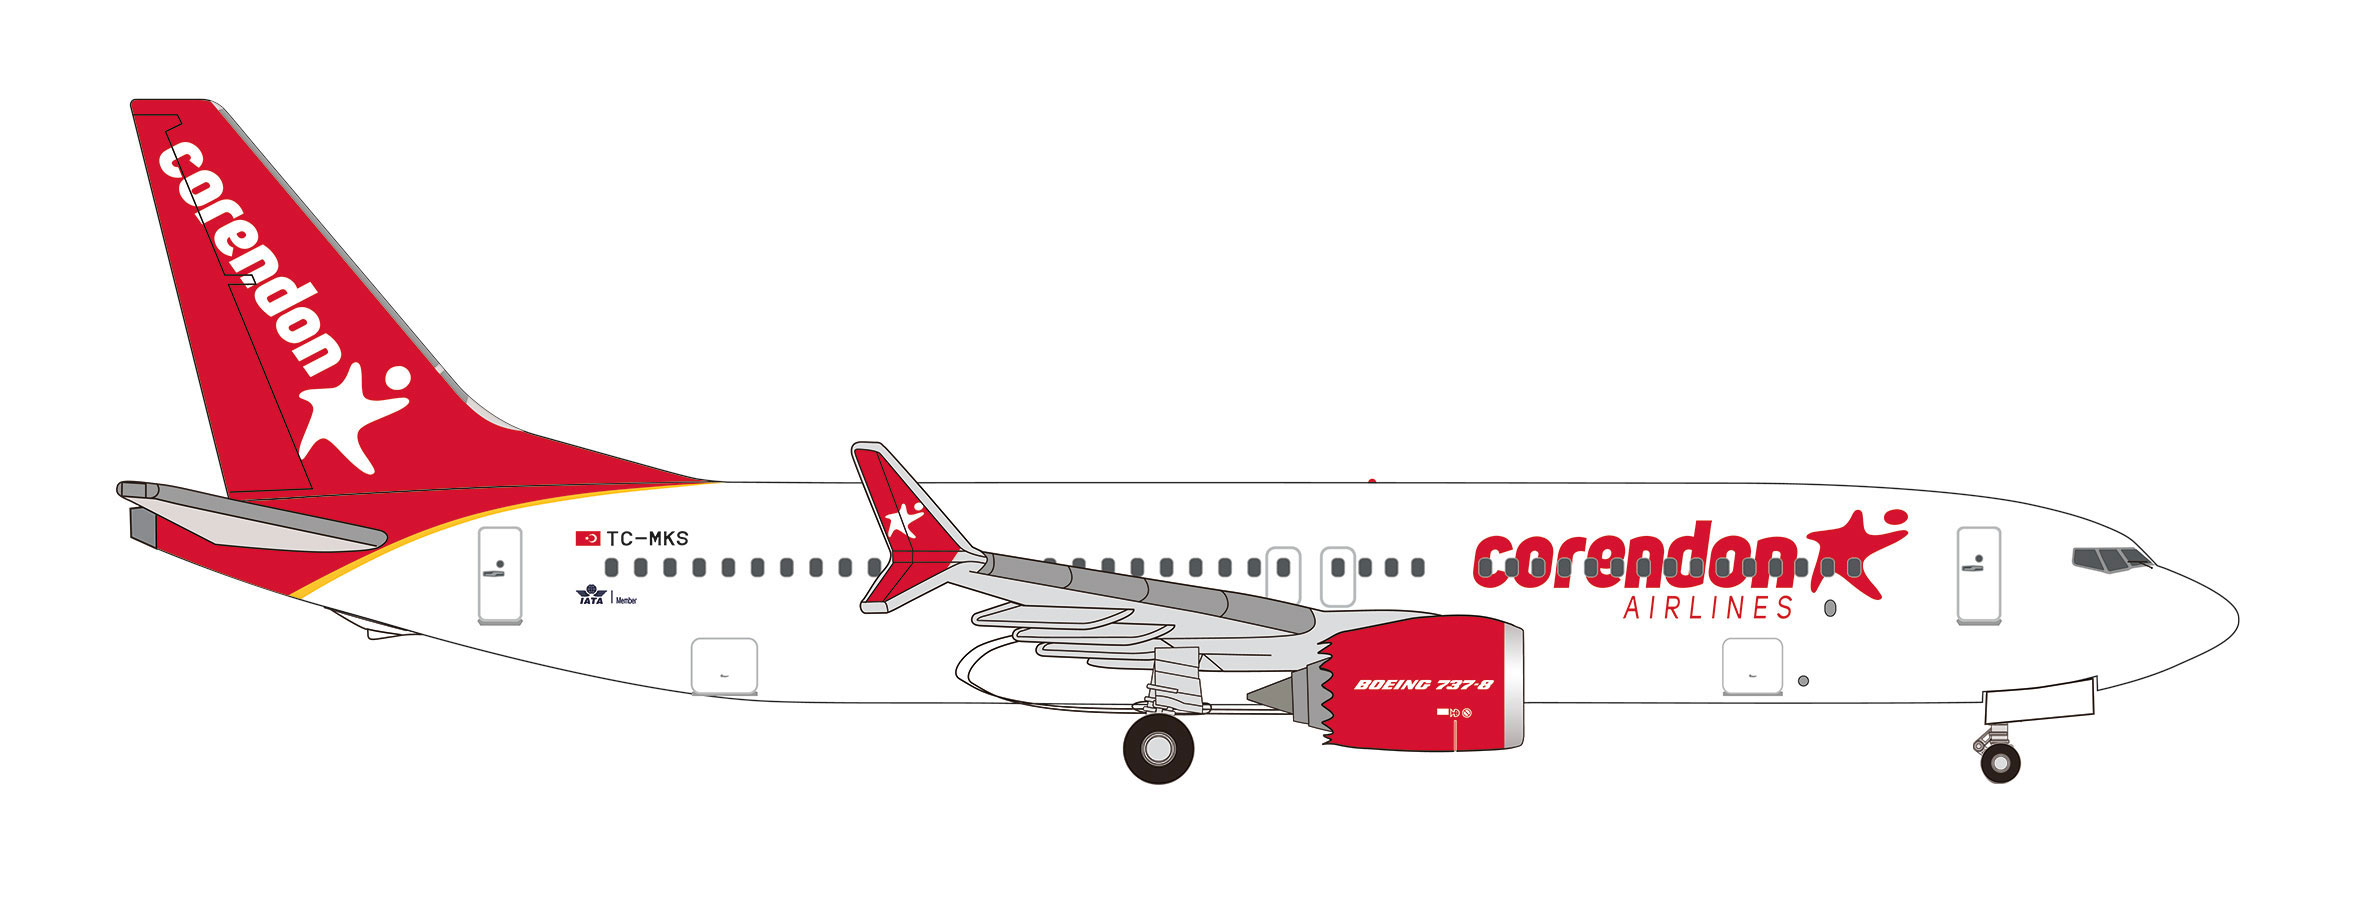 Corendon Airlines Boeing 737 Max 8 – Reg.: TC-MKS